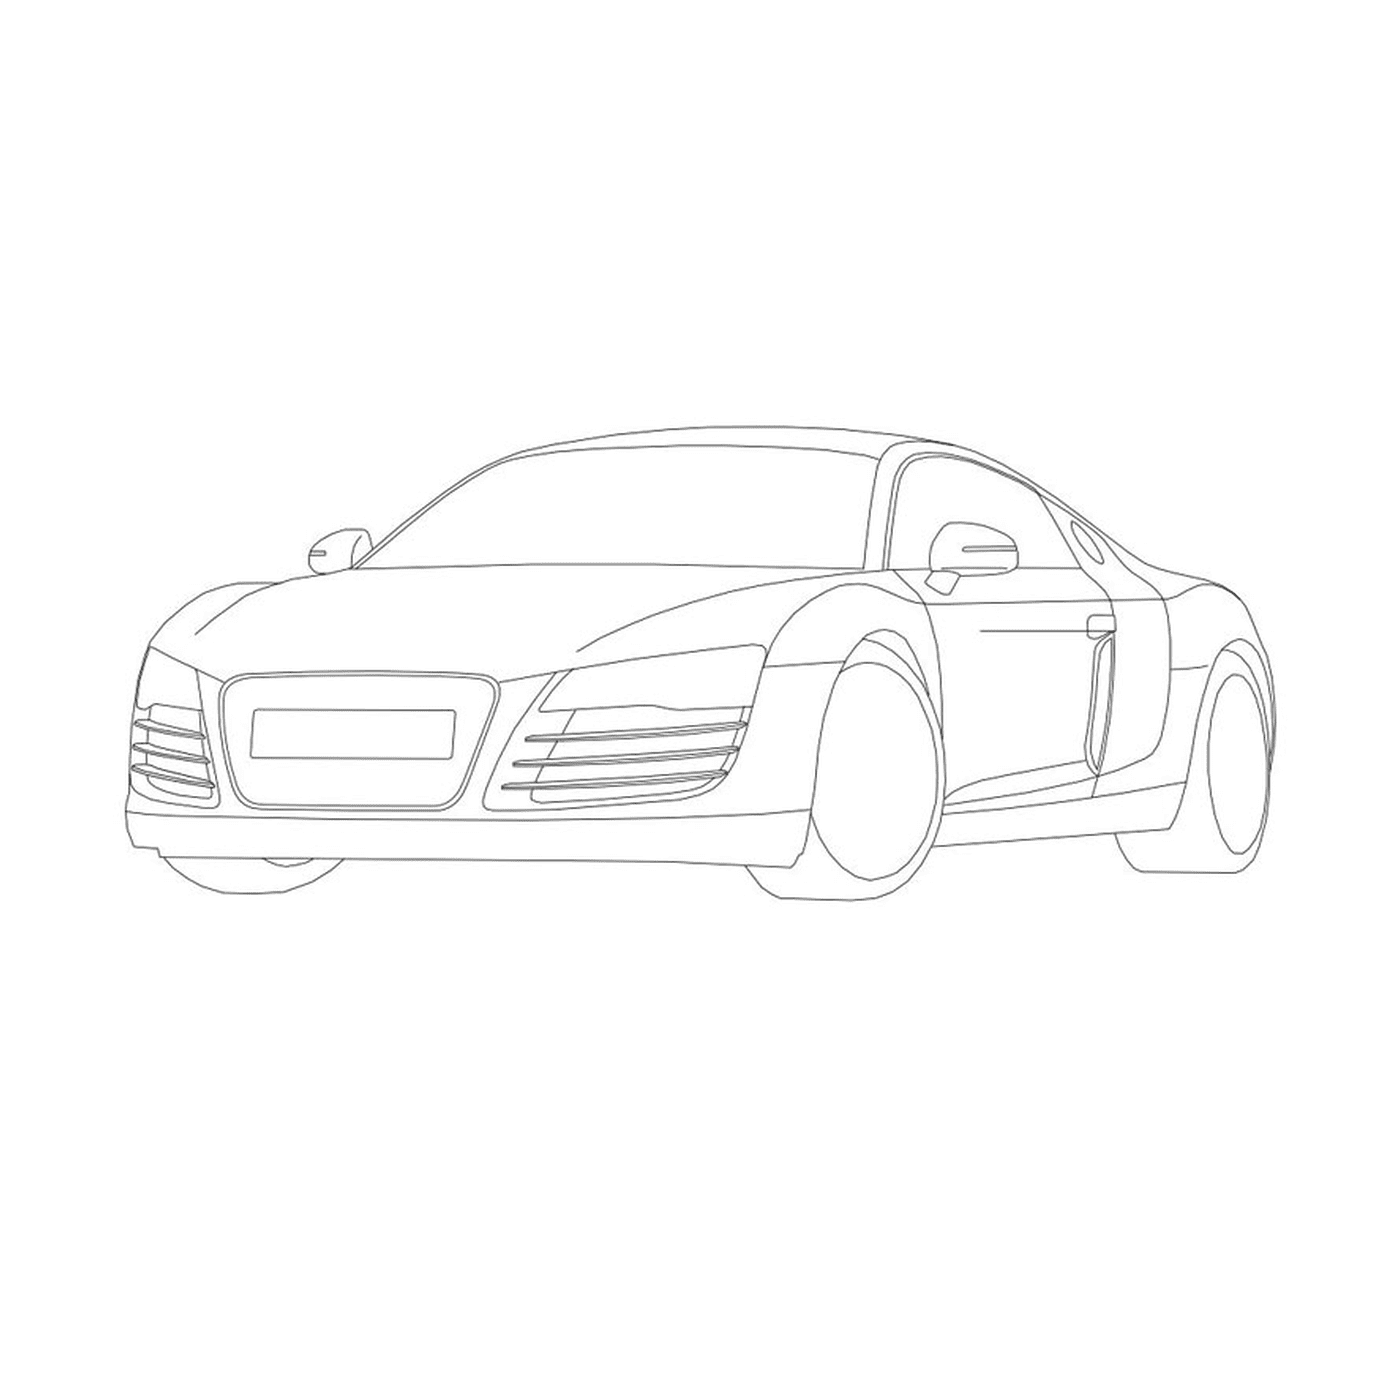  Carro Audi R8 desenhado 